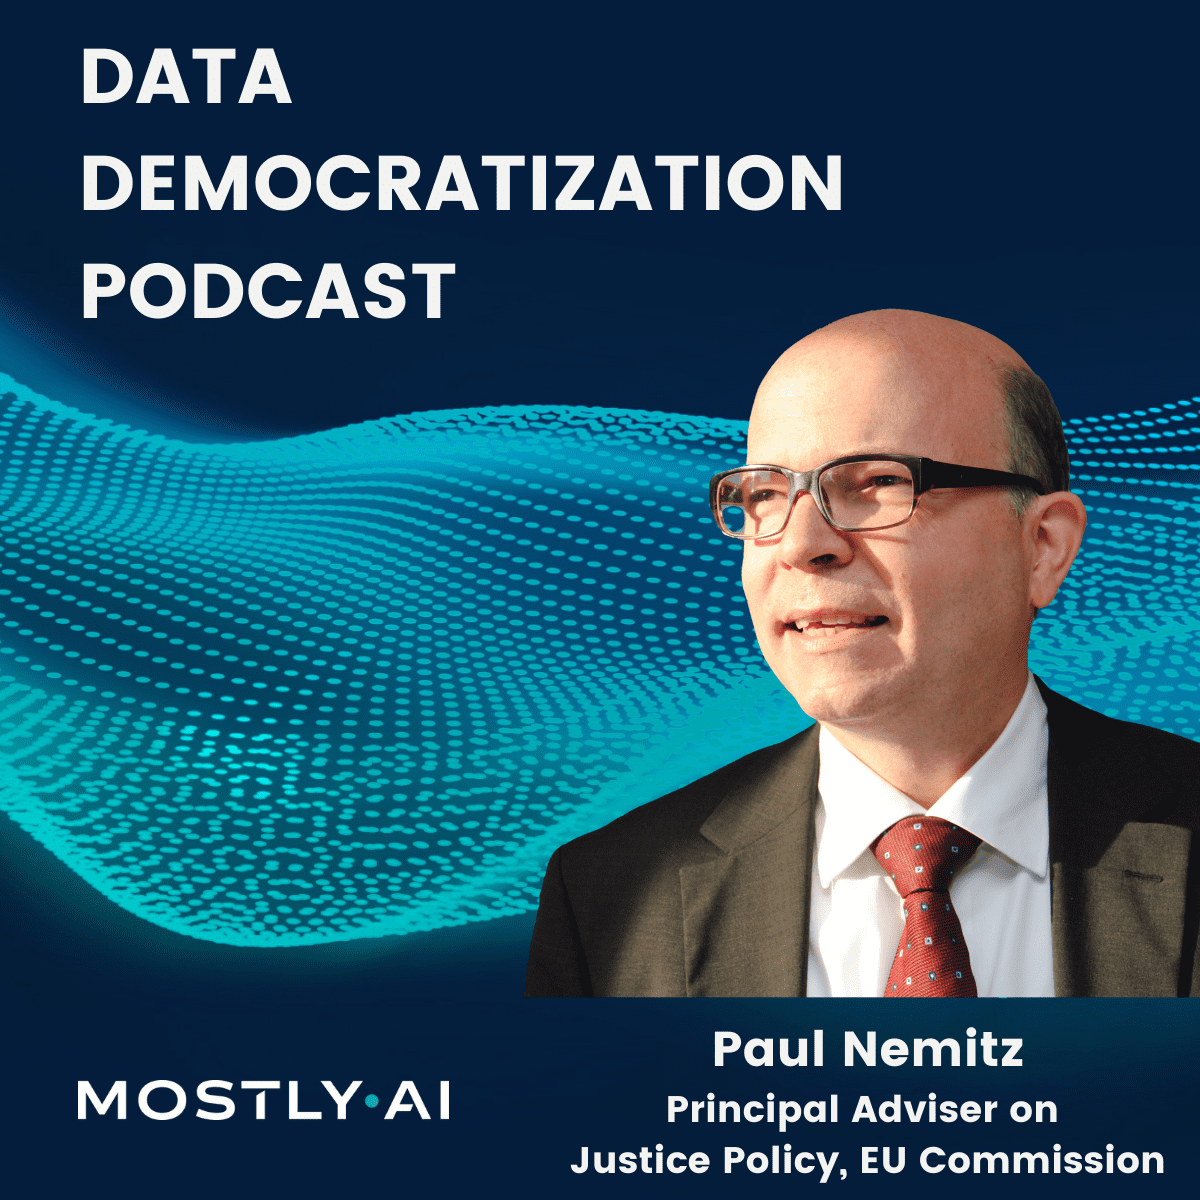 End of AI ethics - Data Democratization Podcast